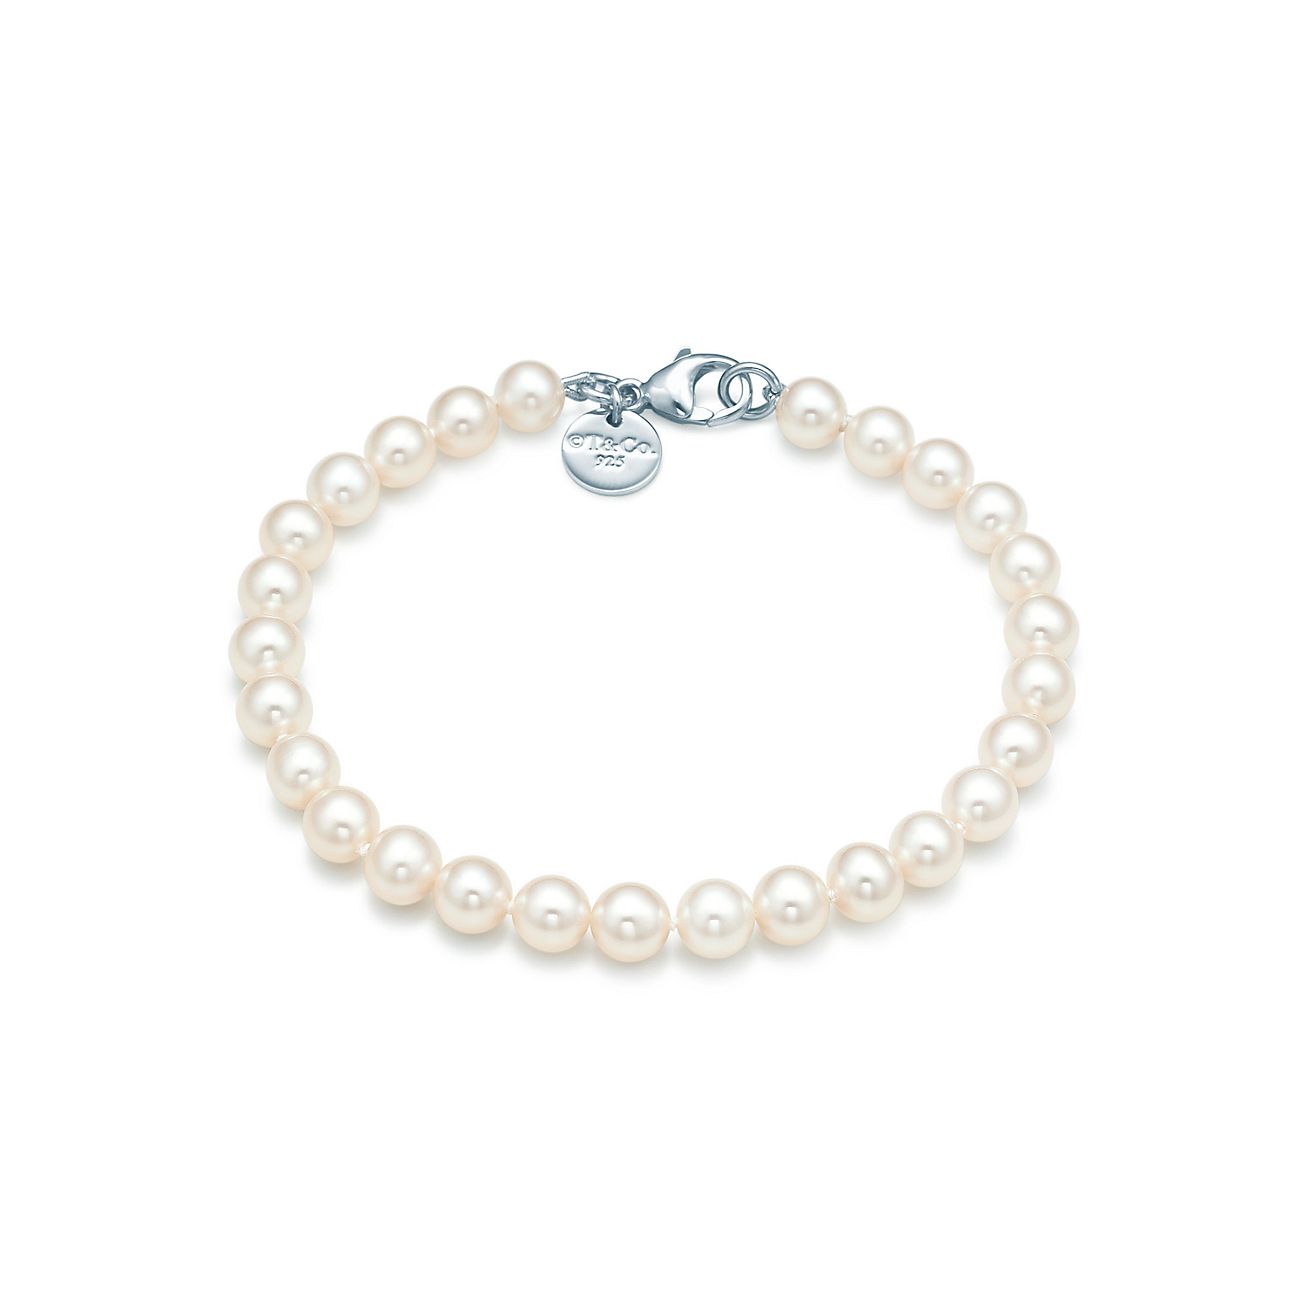 de perlas con broche de plata fina. | Tiffany & Co.